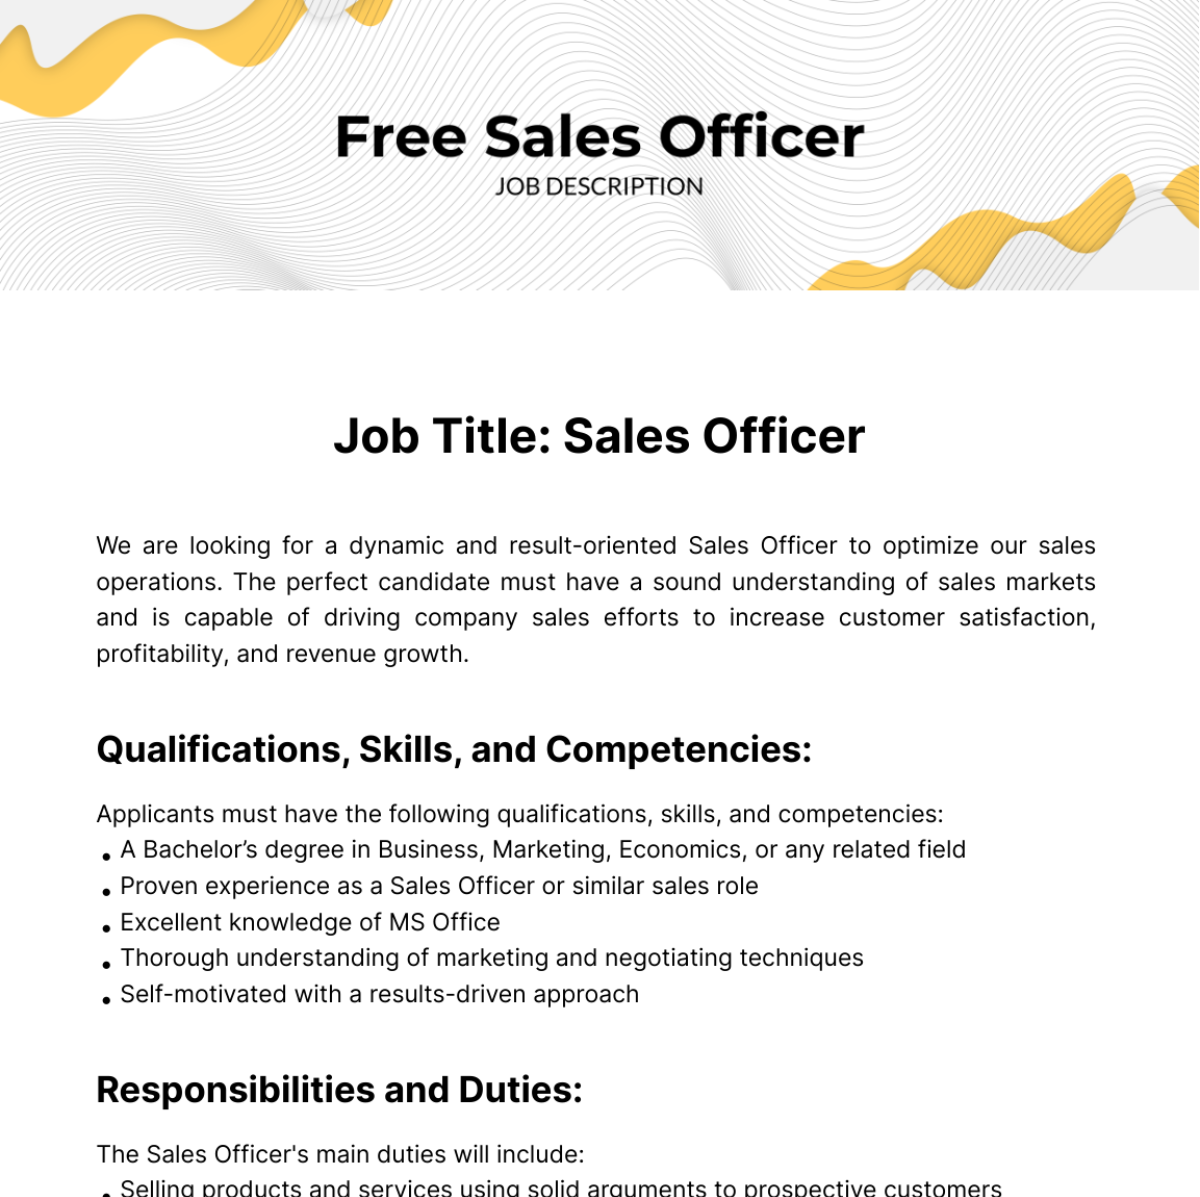 Free Sales Officer Job Description Template